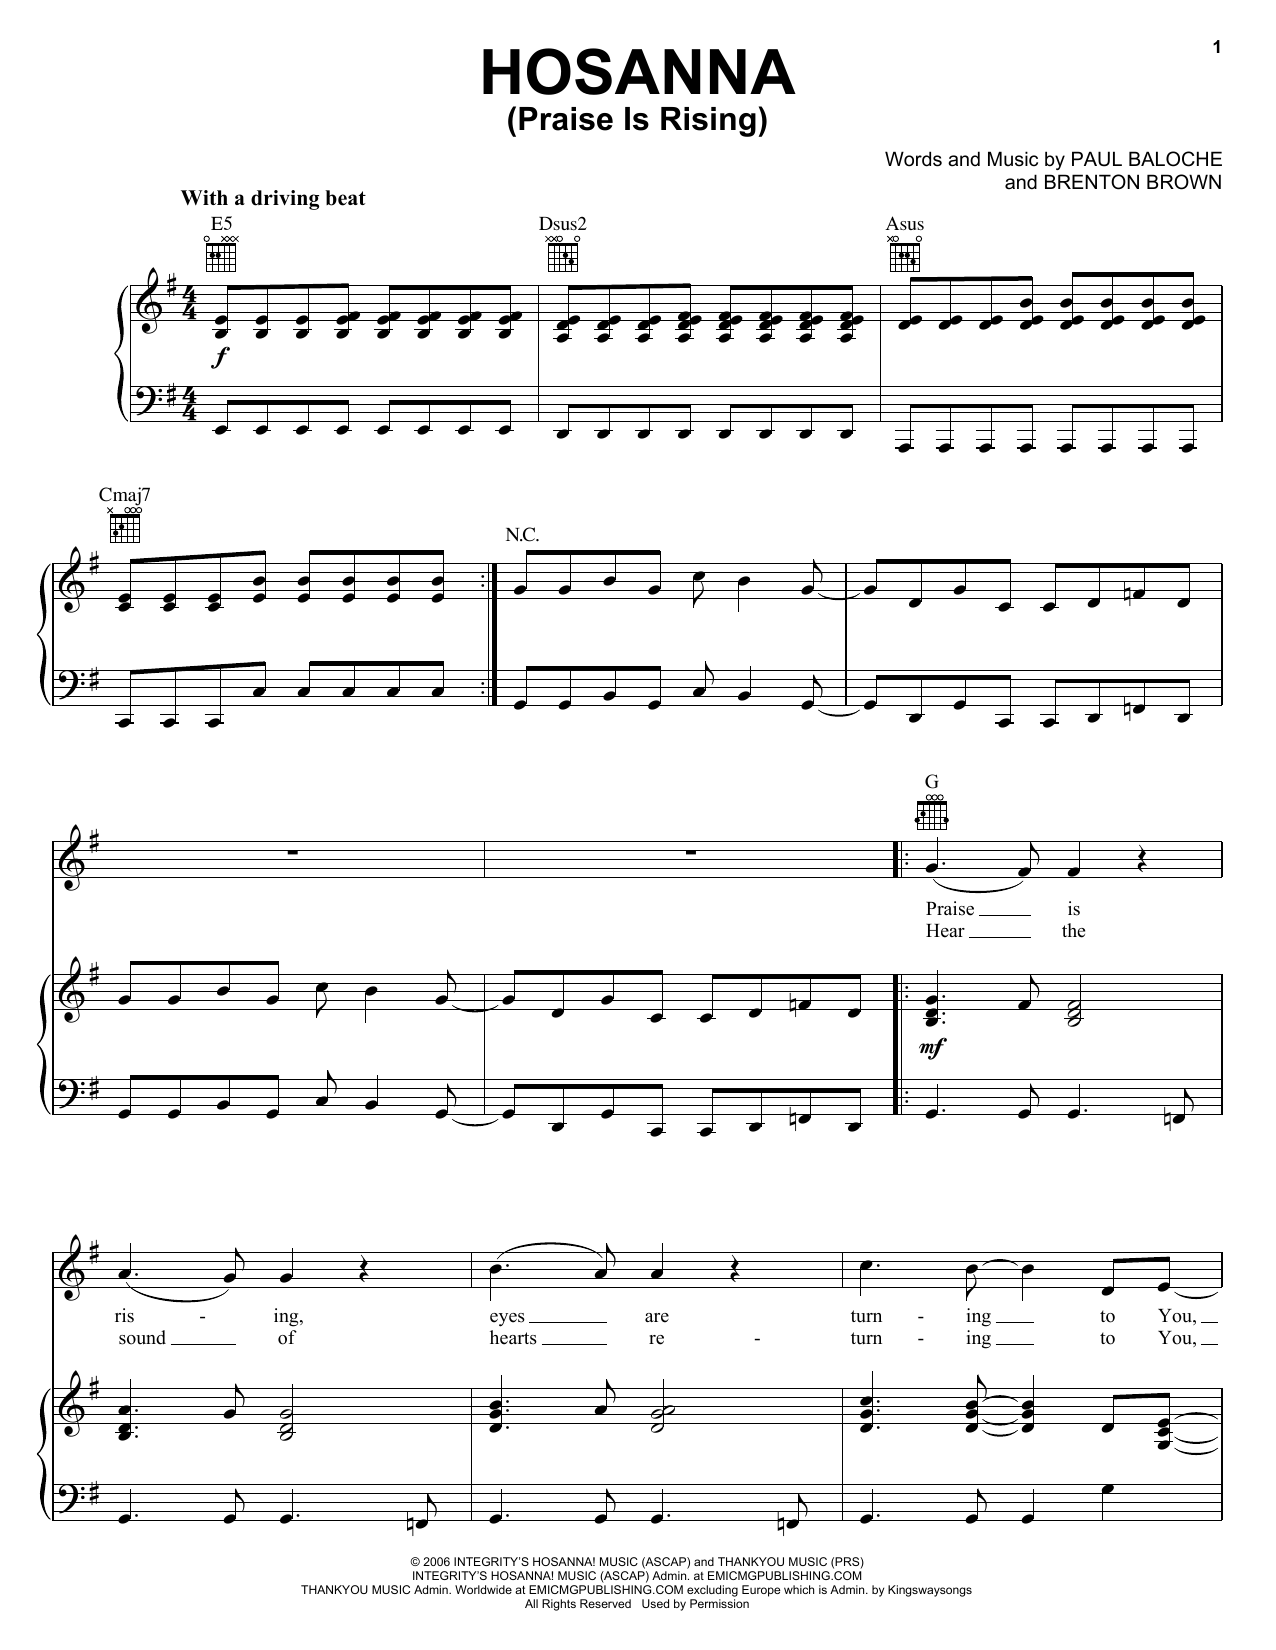 Paul Baloche Hosanna (Praise Is Rising) Sheet Music Notes & Chords for Melody Line, Lyrics & Chords - Download or Print PDF